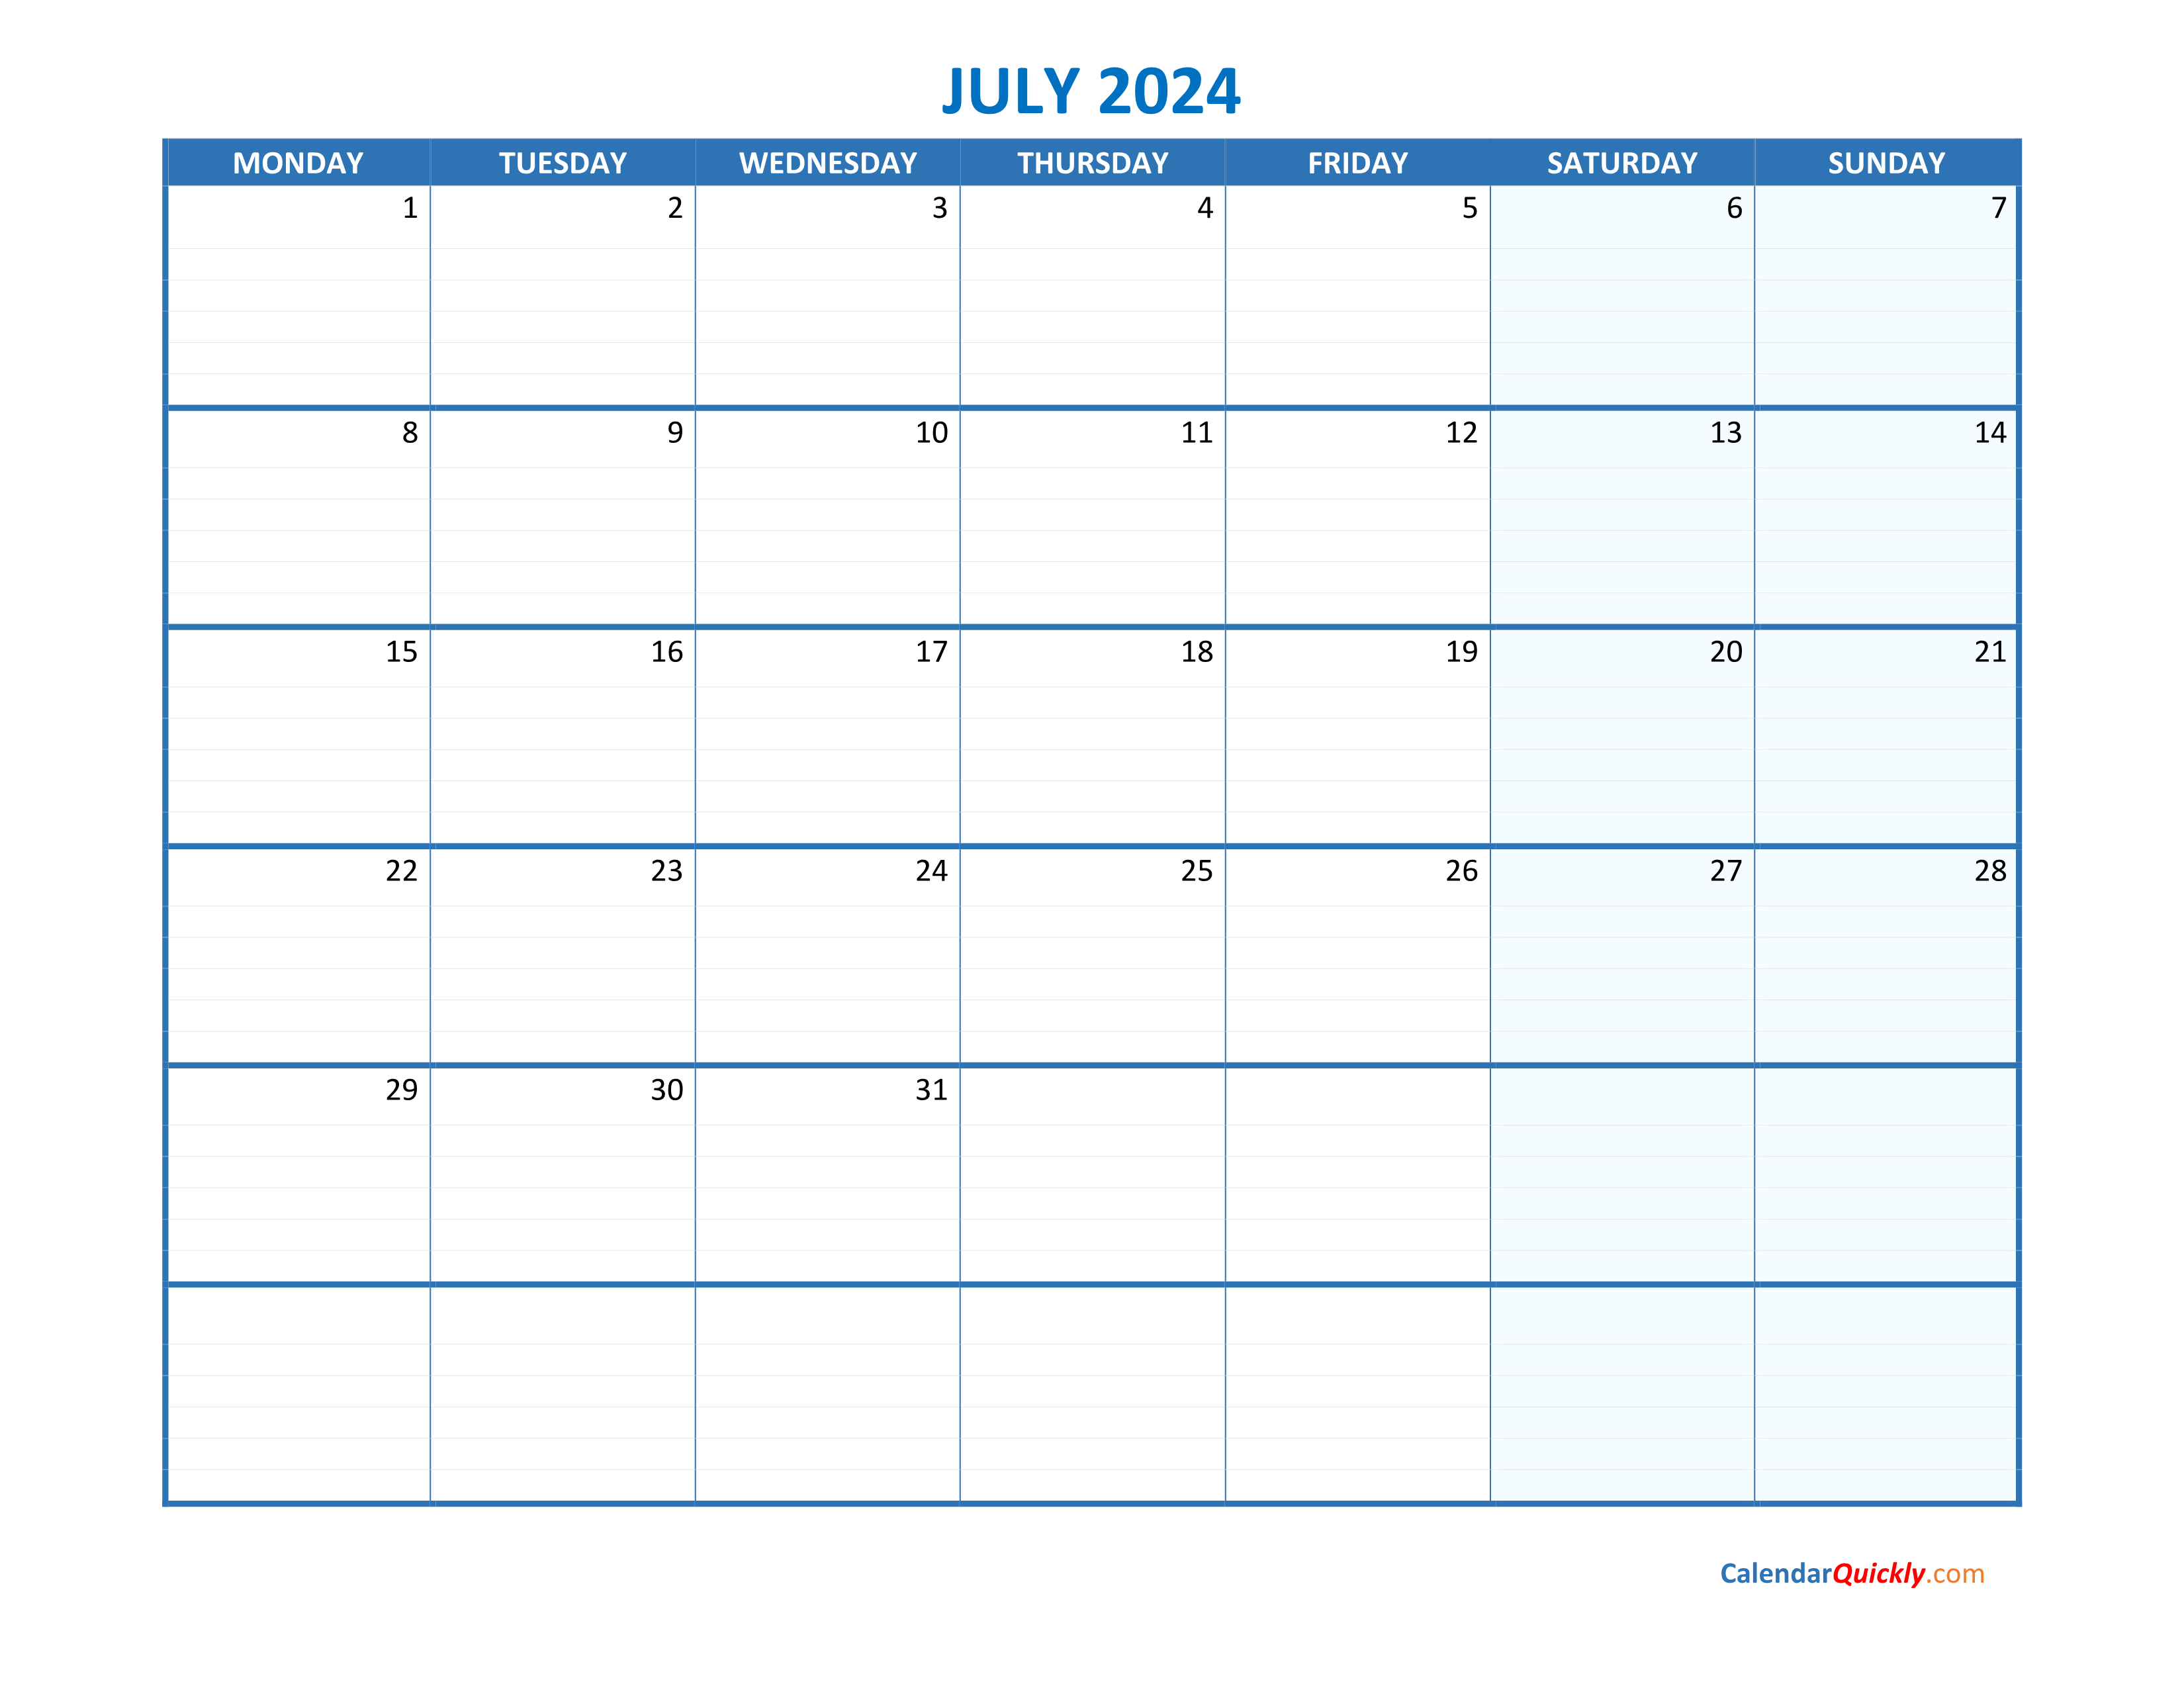 July Monday 2024 Blank Calendar Calendar Quickly - Free Printable 2024 Calendar Starting Monday